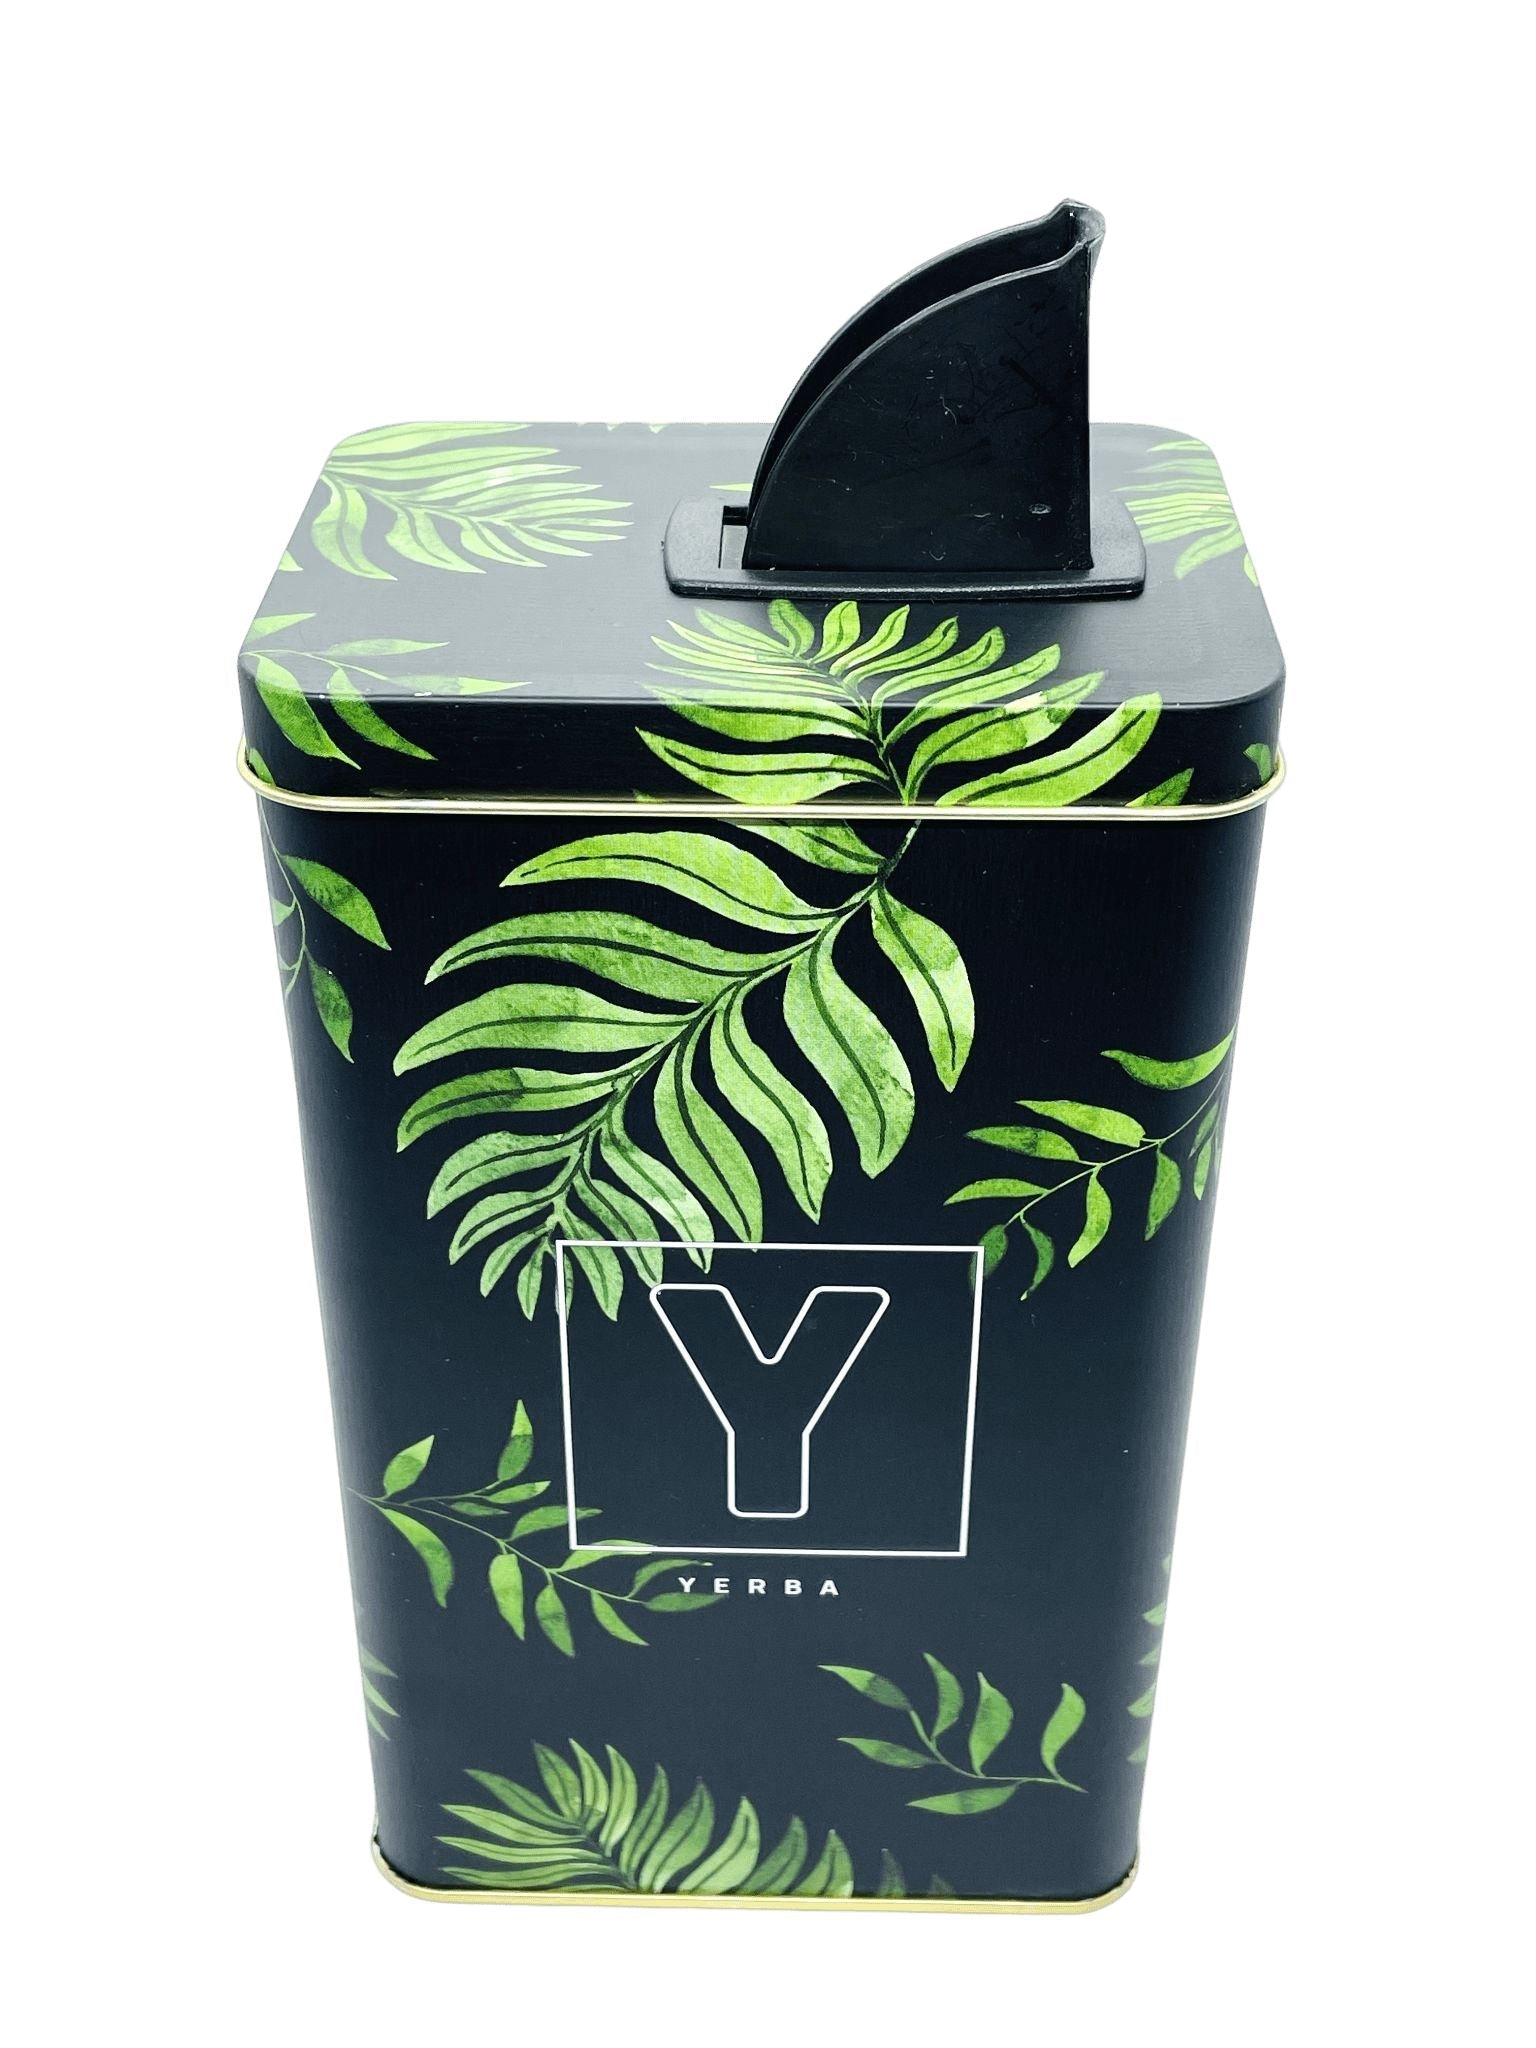 Yerba Mate Container Black Leaves (Yerbera) Mates Hispanic Pantry 